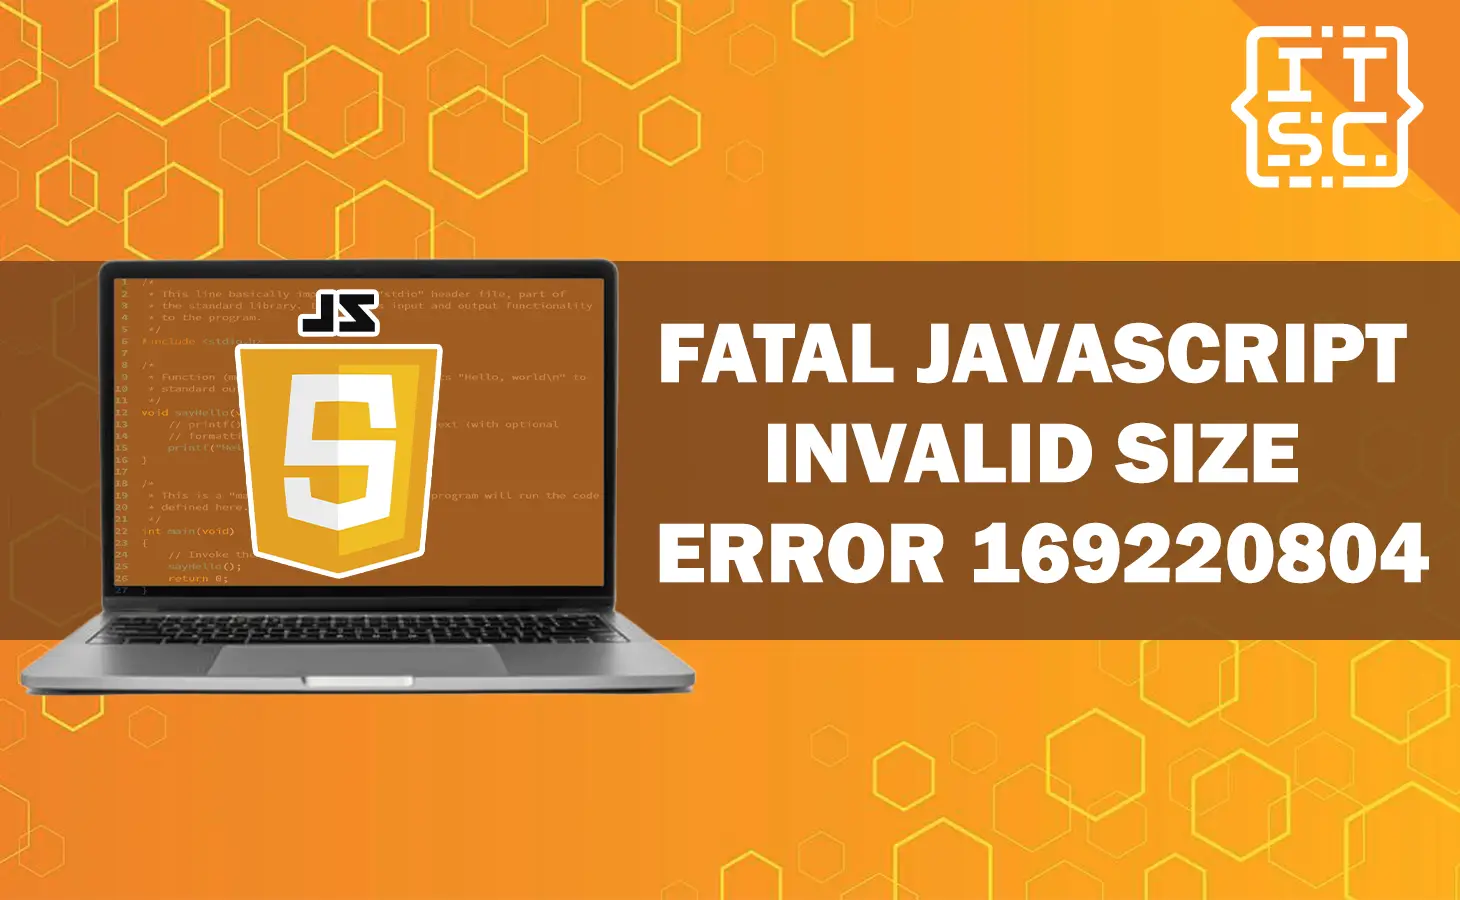 How to fix fatal JavaScript invalid size error 169220804?